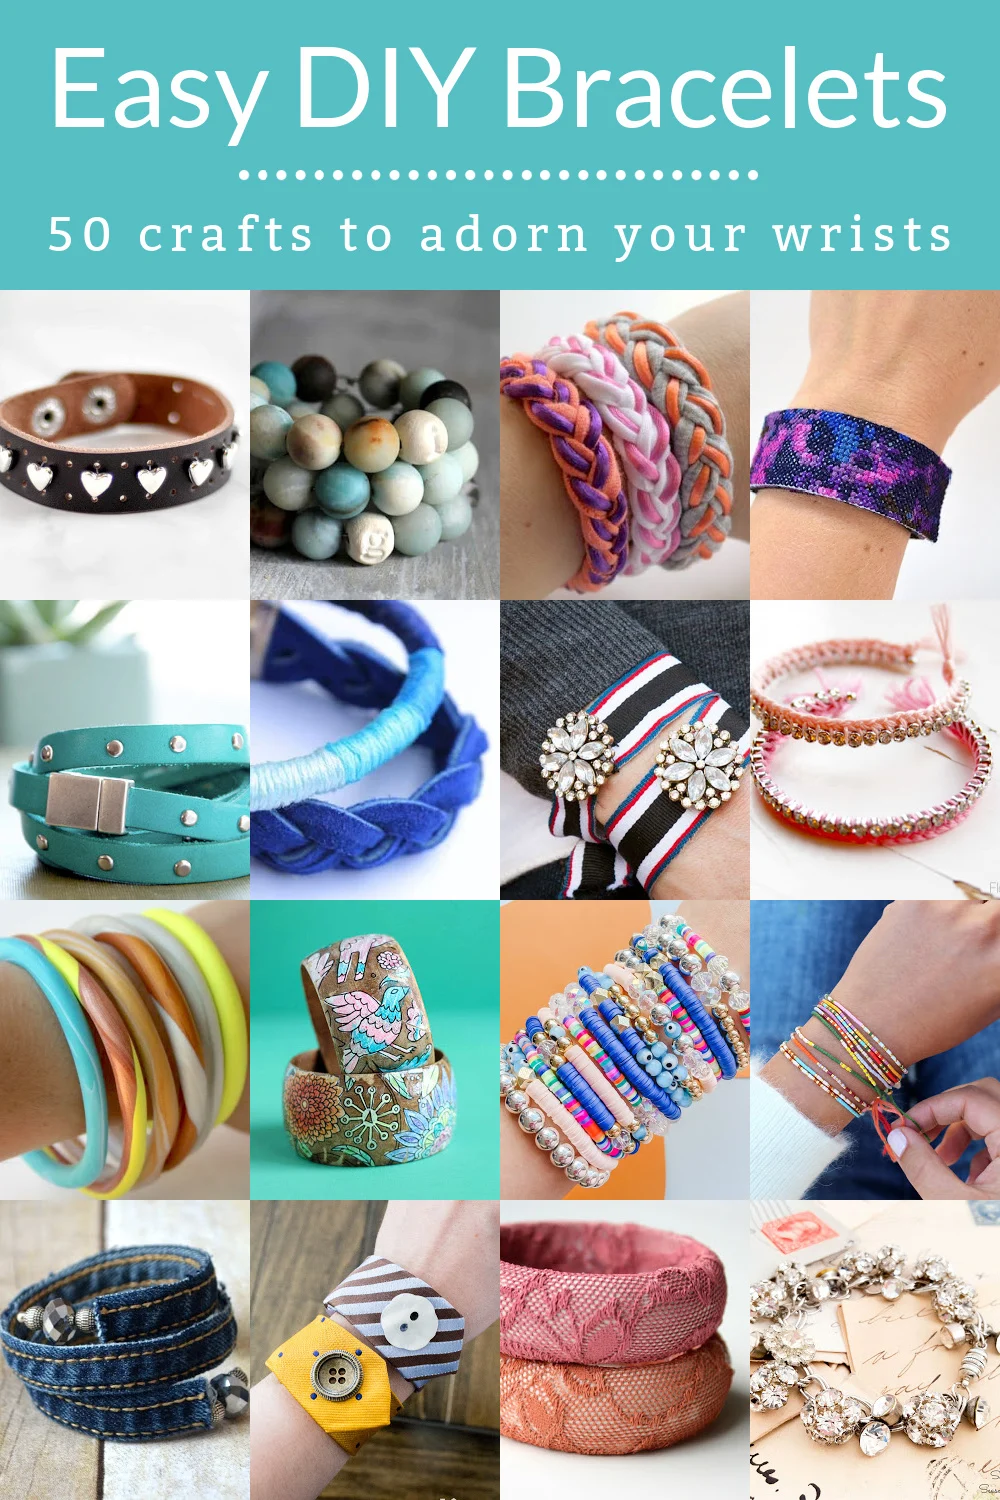 4 DIY Thread Bracelet Ideas  How To Make Bracelets  DIY Jewelry Making   Creationyou  YouTube